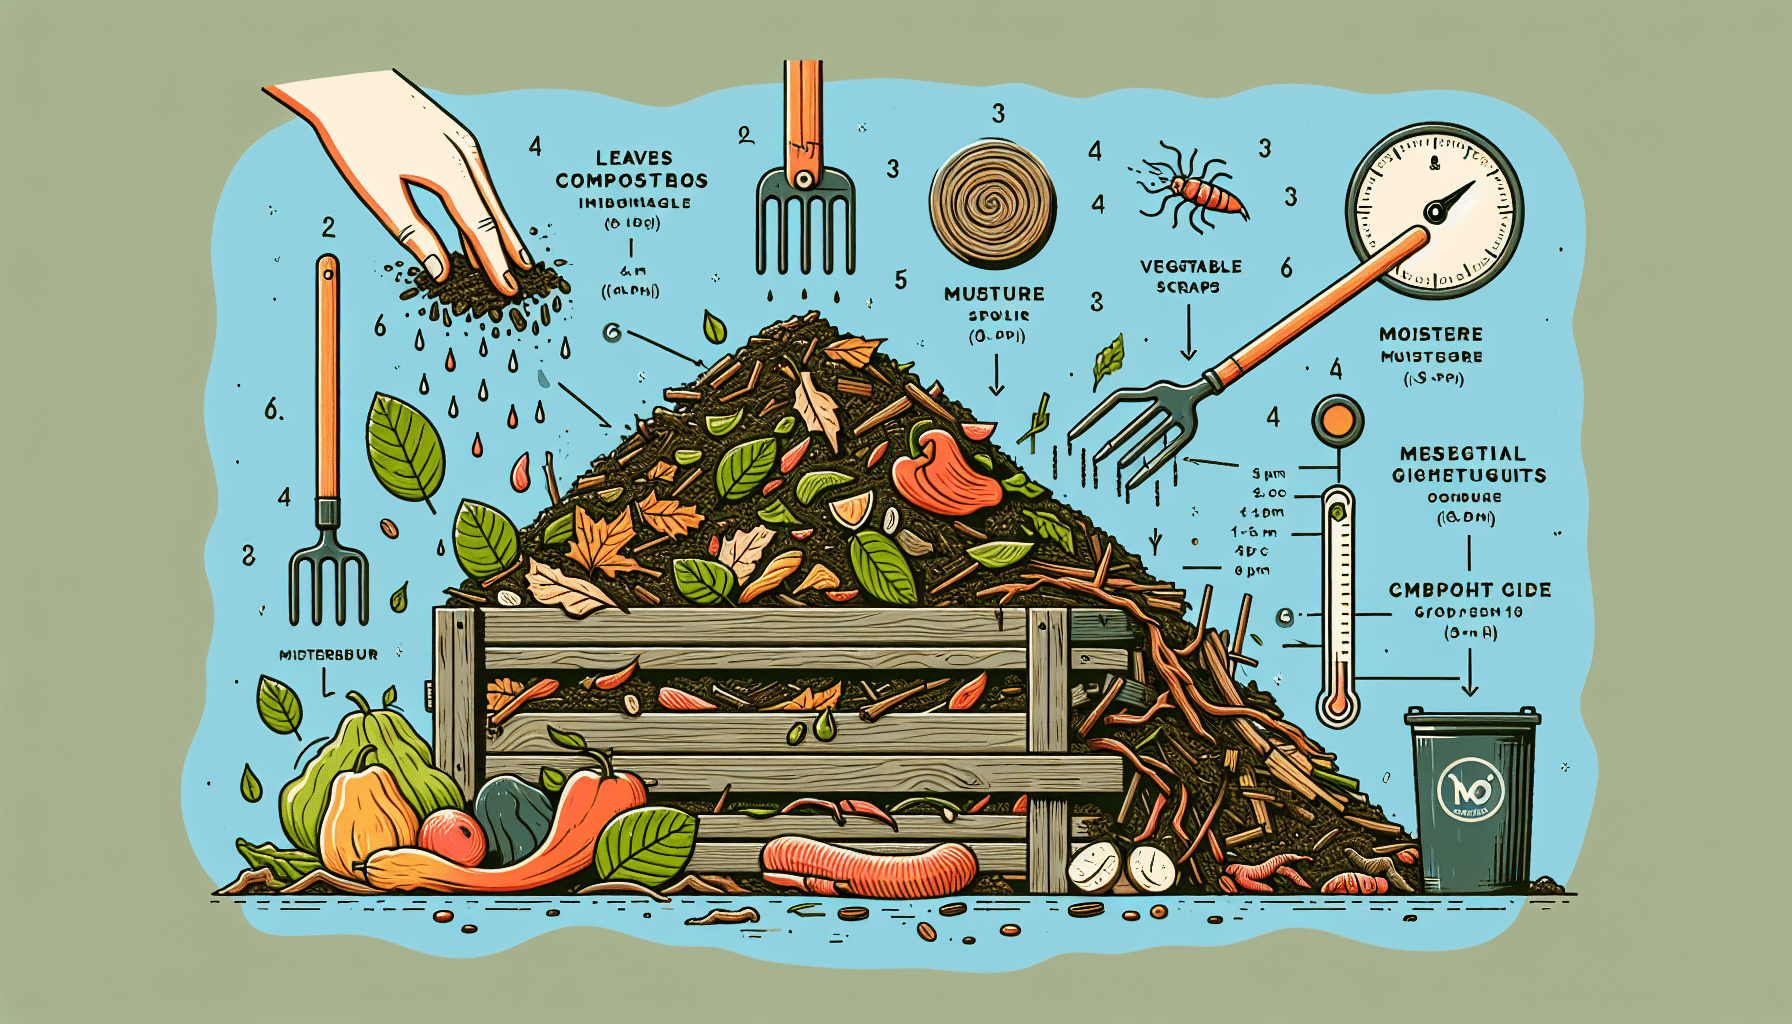 How Do I Maintain A Compost Pile?